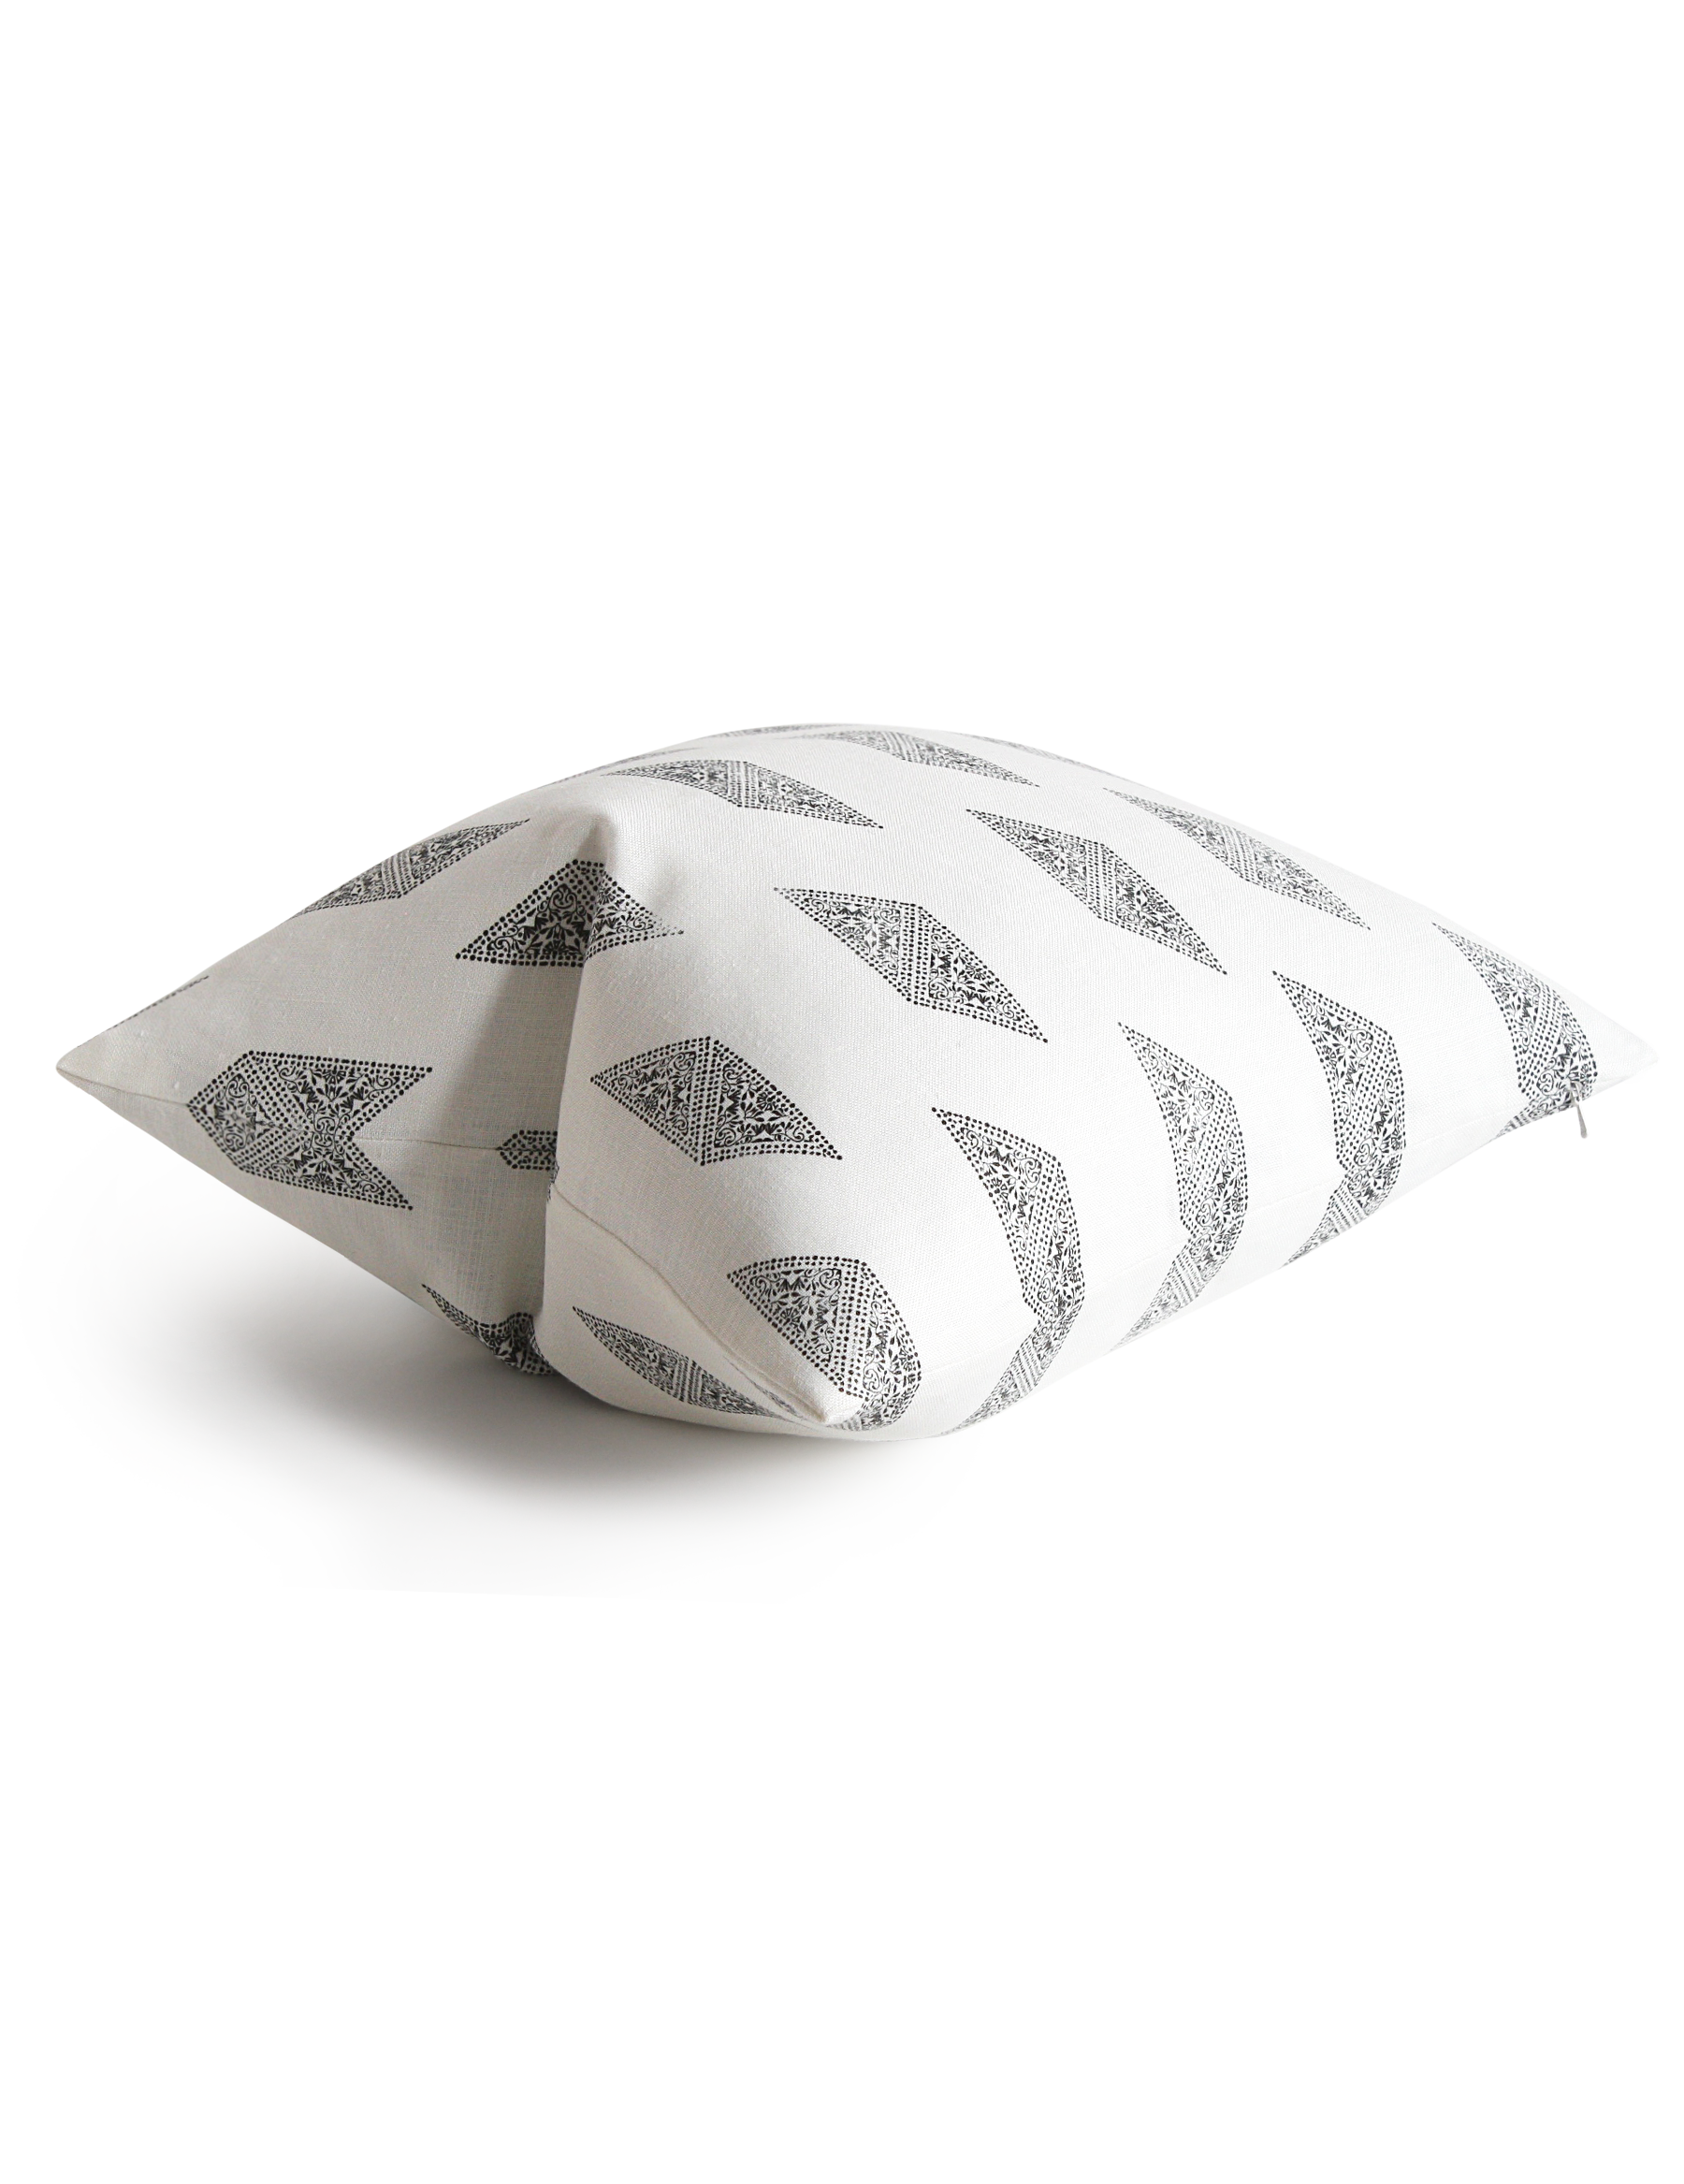 Myriad Pillow / Kohl Oyster